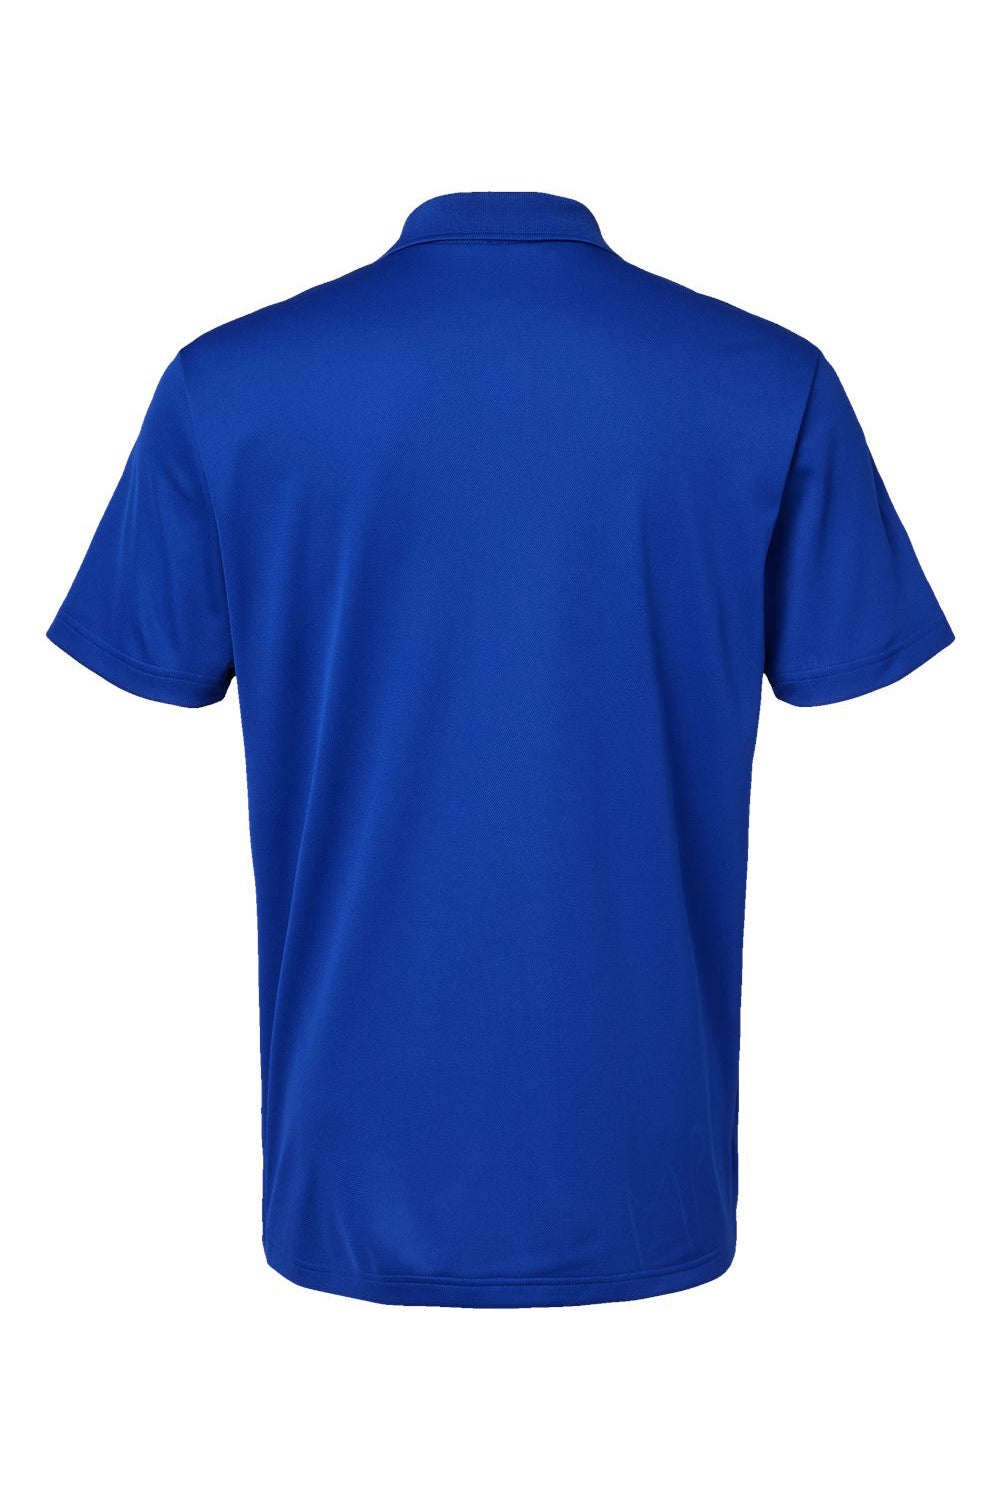 Adidas A430 Mens UV Protection Short Sleeve Polo Shirt Collegiate Royal Blue Flat Back